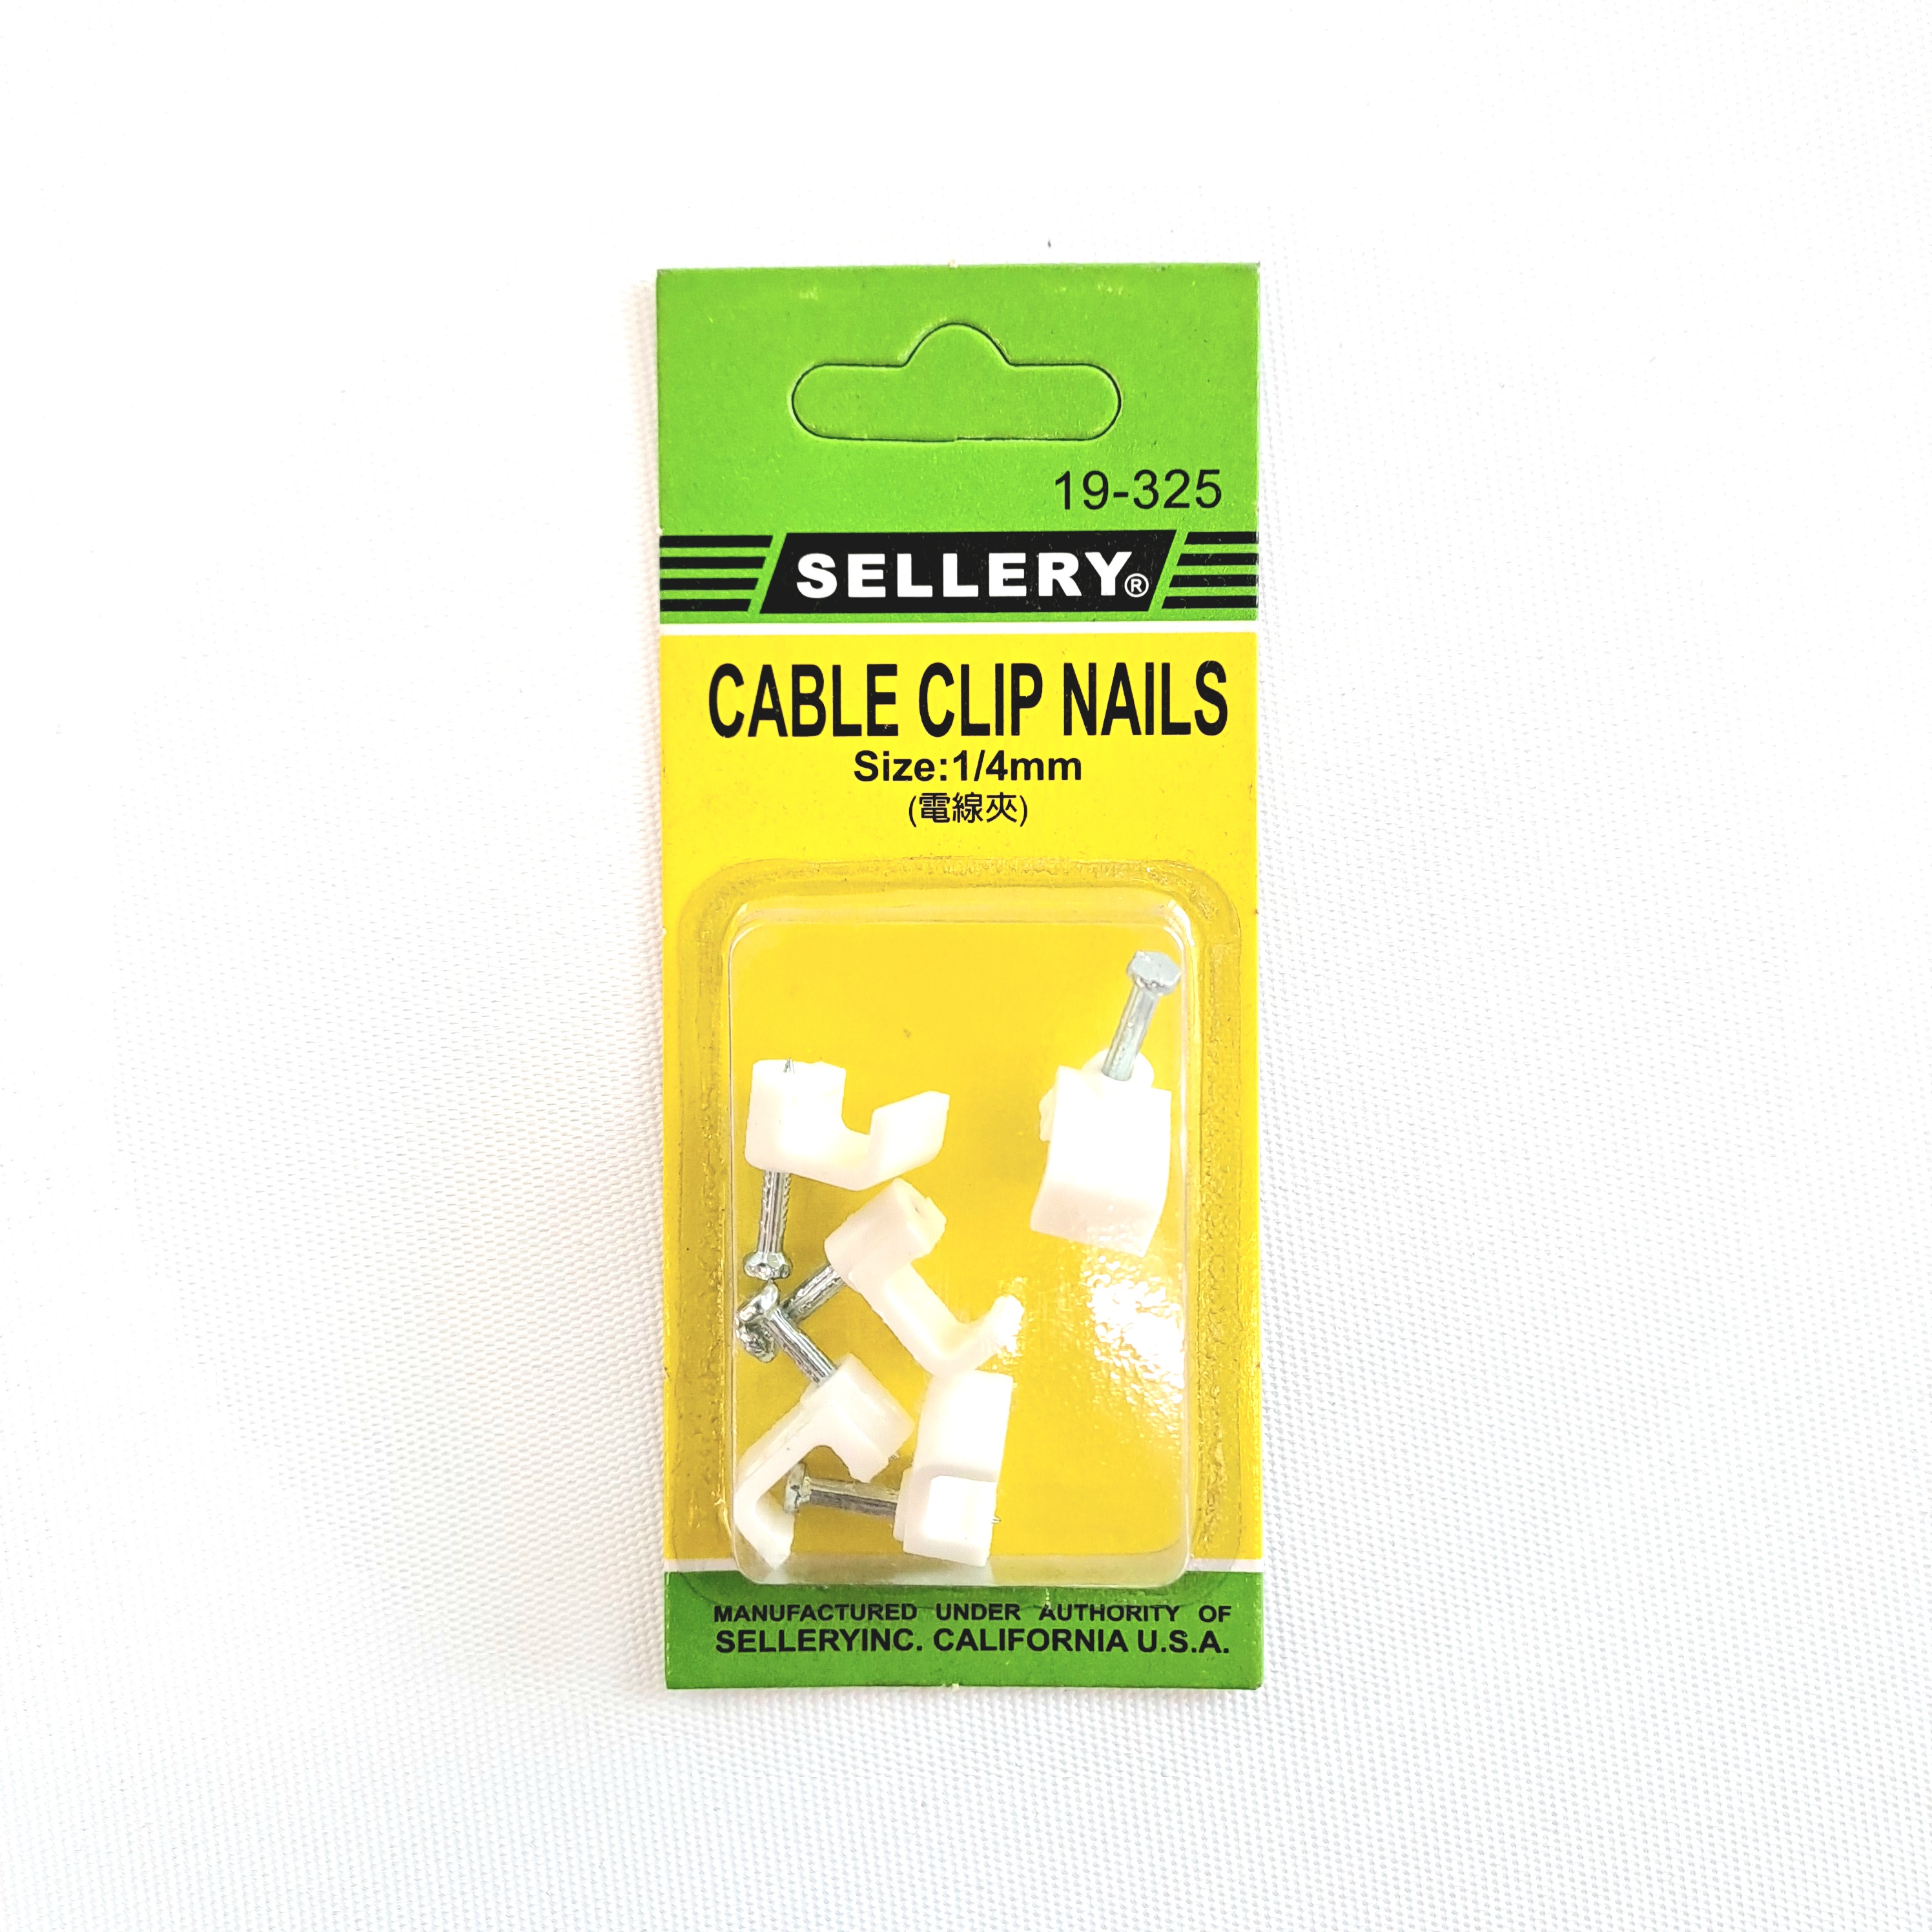 Sellery 19-325 5pcs Cable Clip Nails -1/4mm (5 x 11.7 x 1.7)